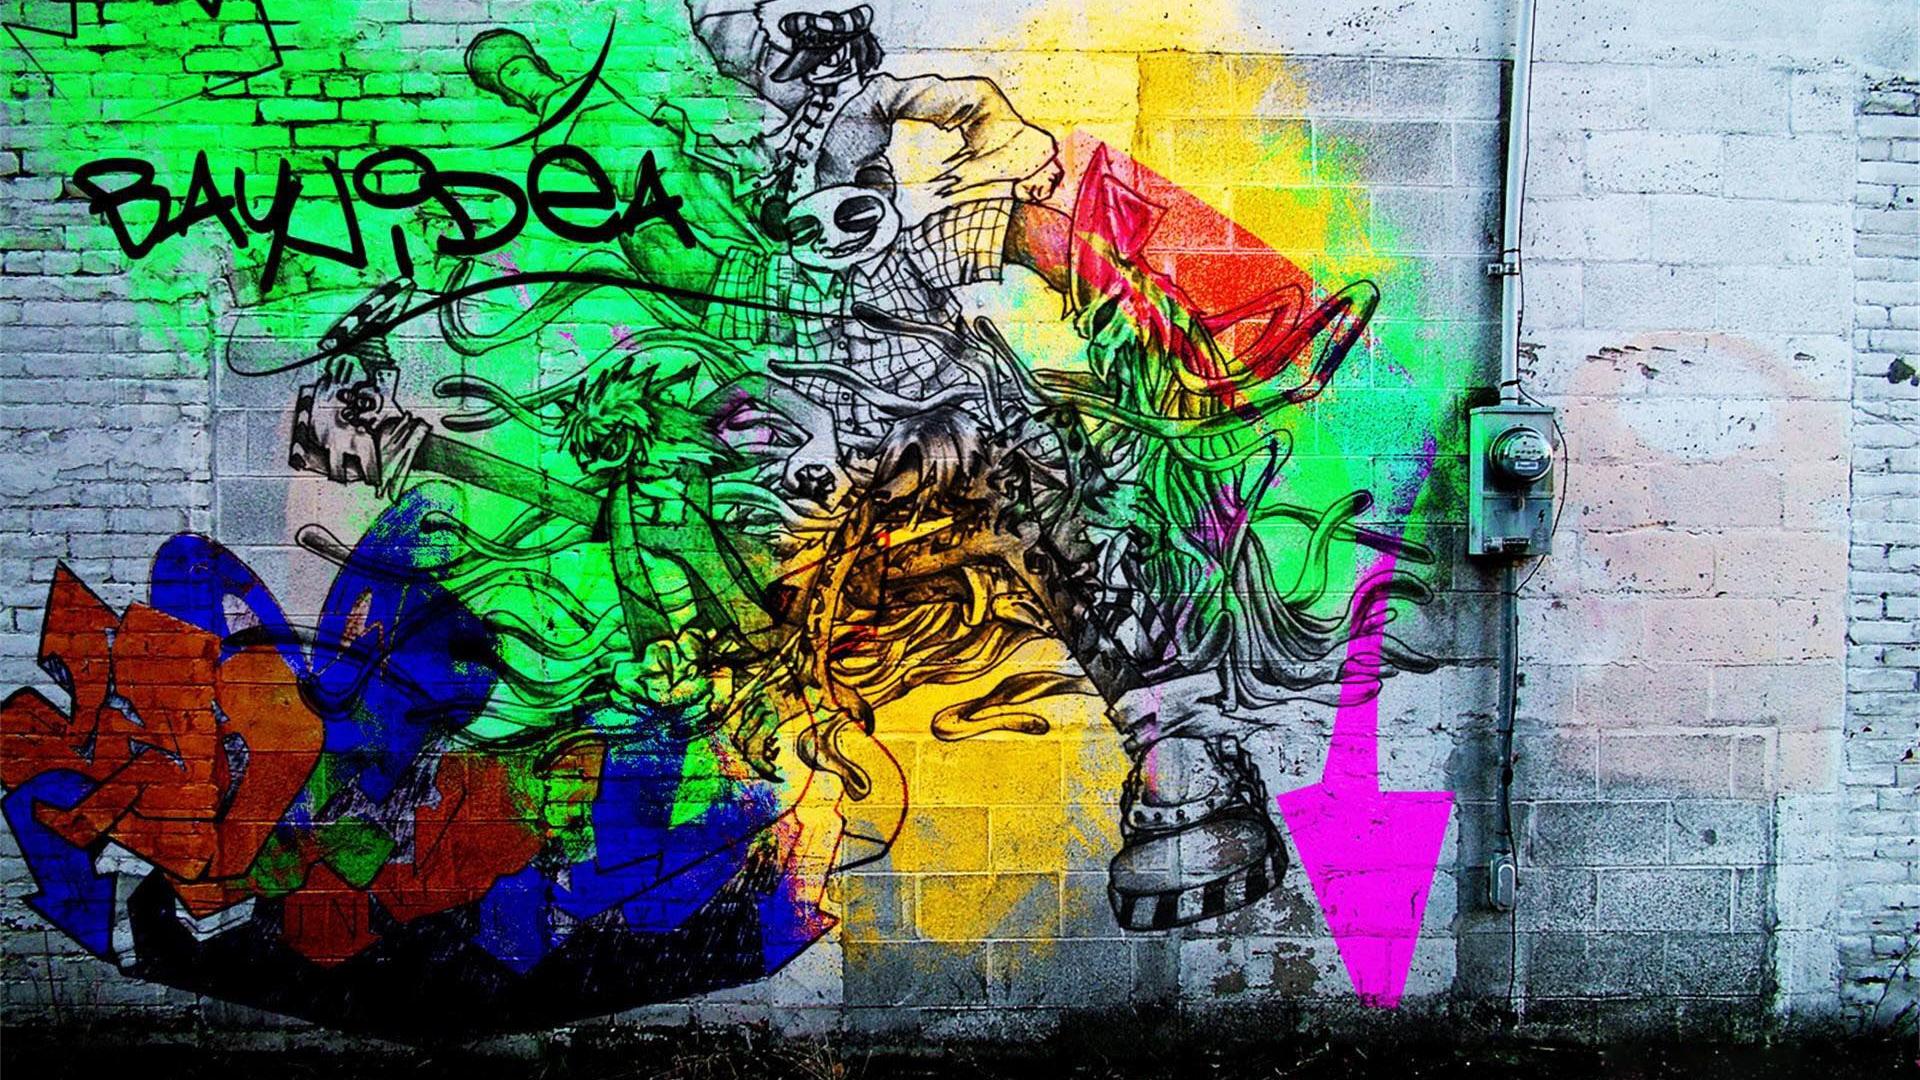 Graffiti Wallpaper Desktops Laptop Image